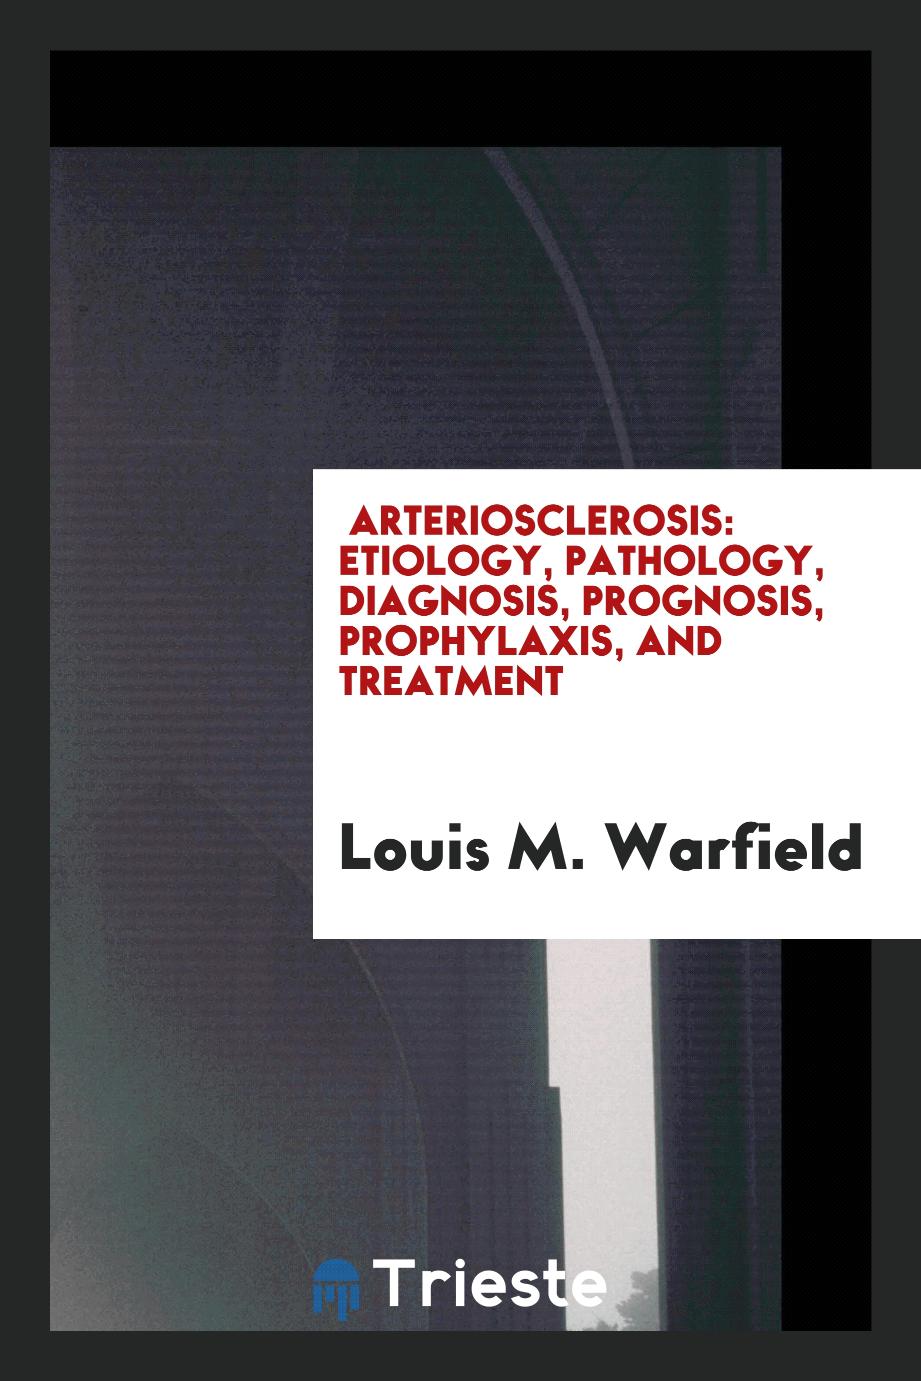 Arteriosclerosis: etiology, pathology, diagnosis, prognosis, prophylaxis, and treatment